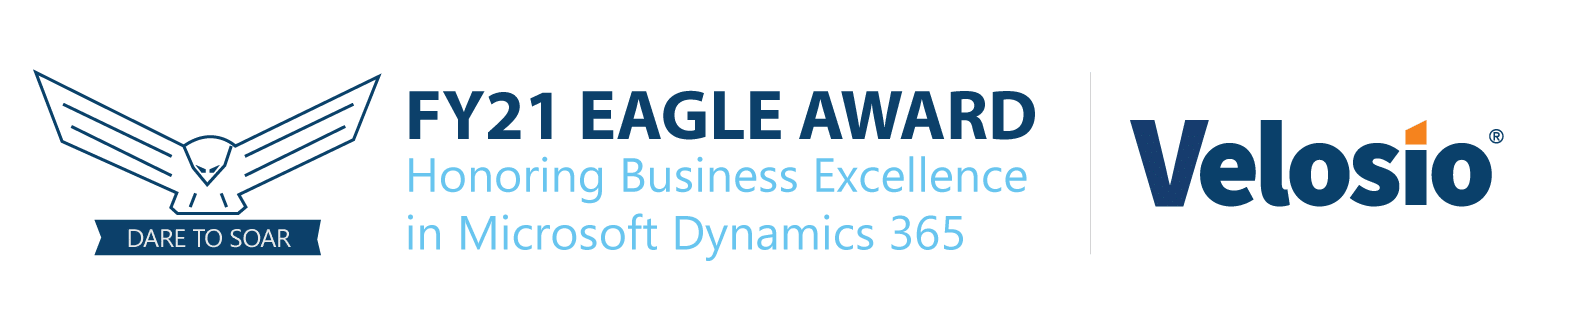 FY21 Microsoft Eagle Award